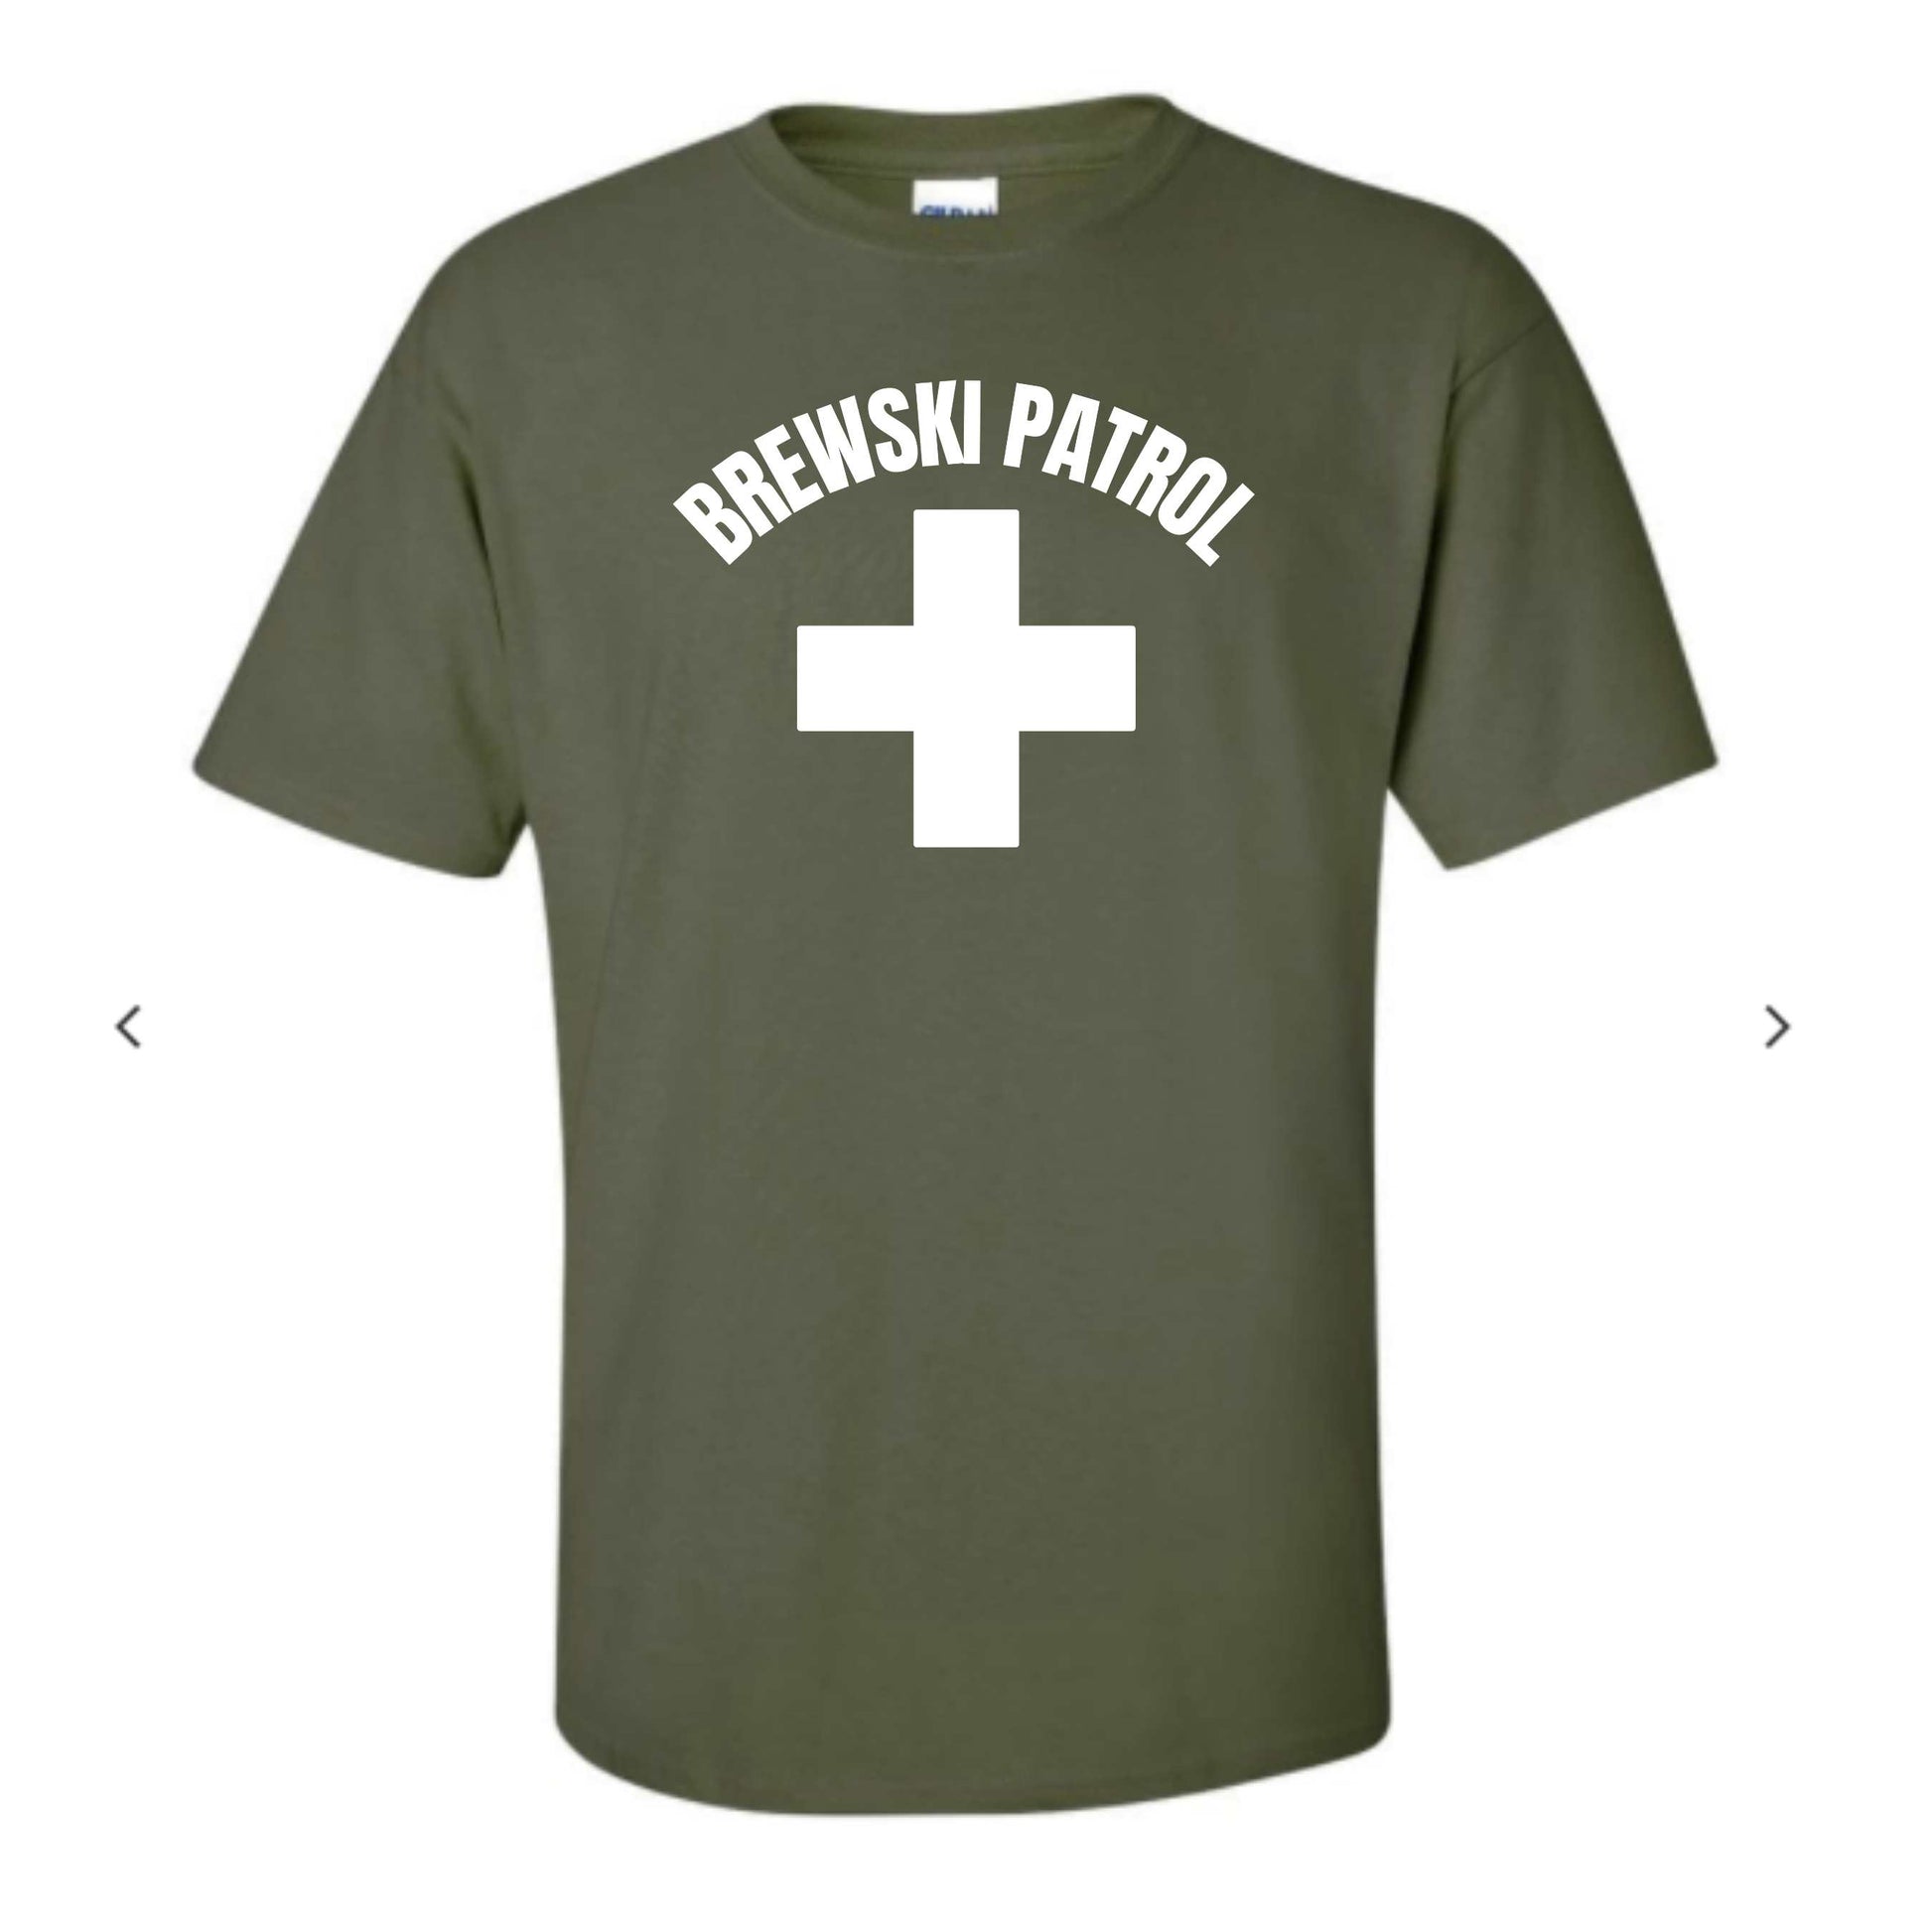 Brewski Patrol - Graphic T-Shirt - Mister Snarky's